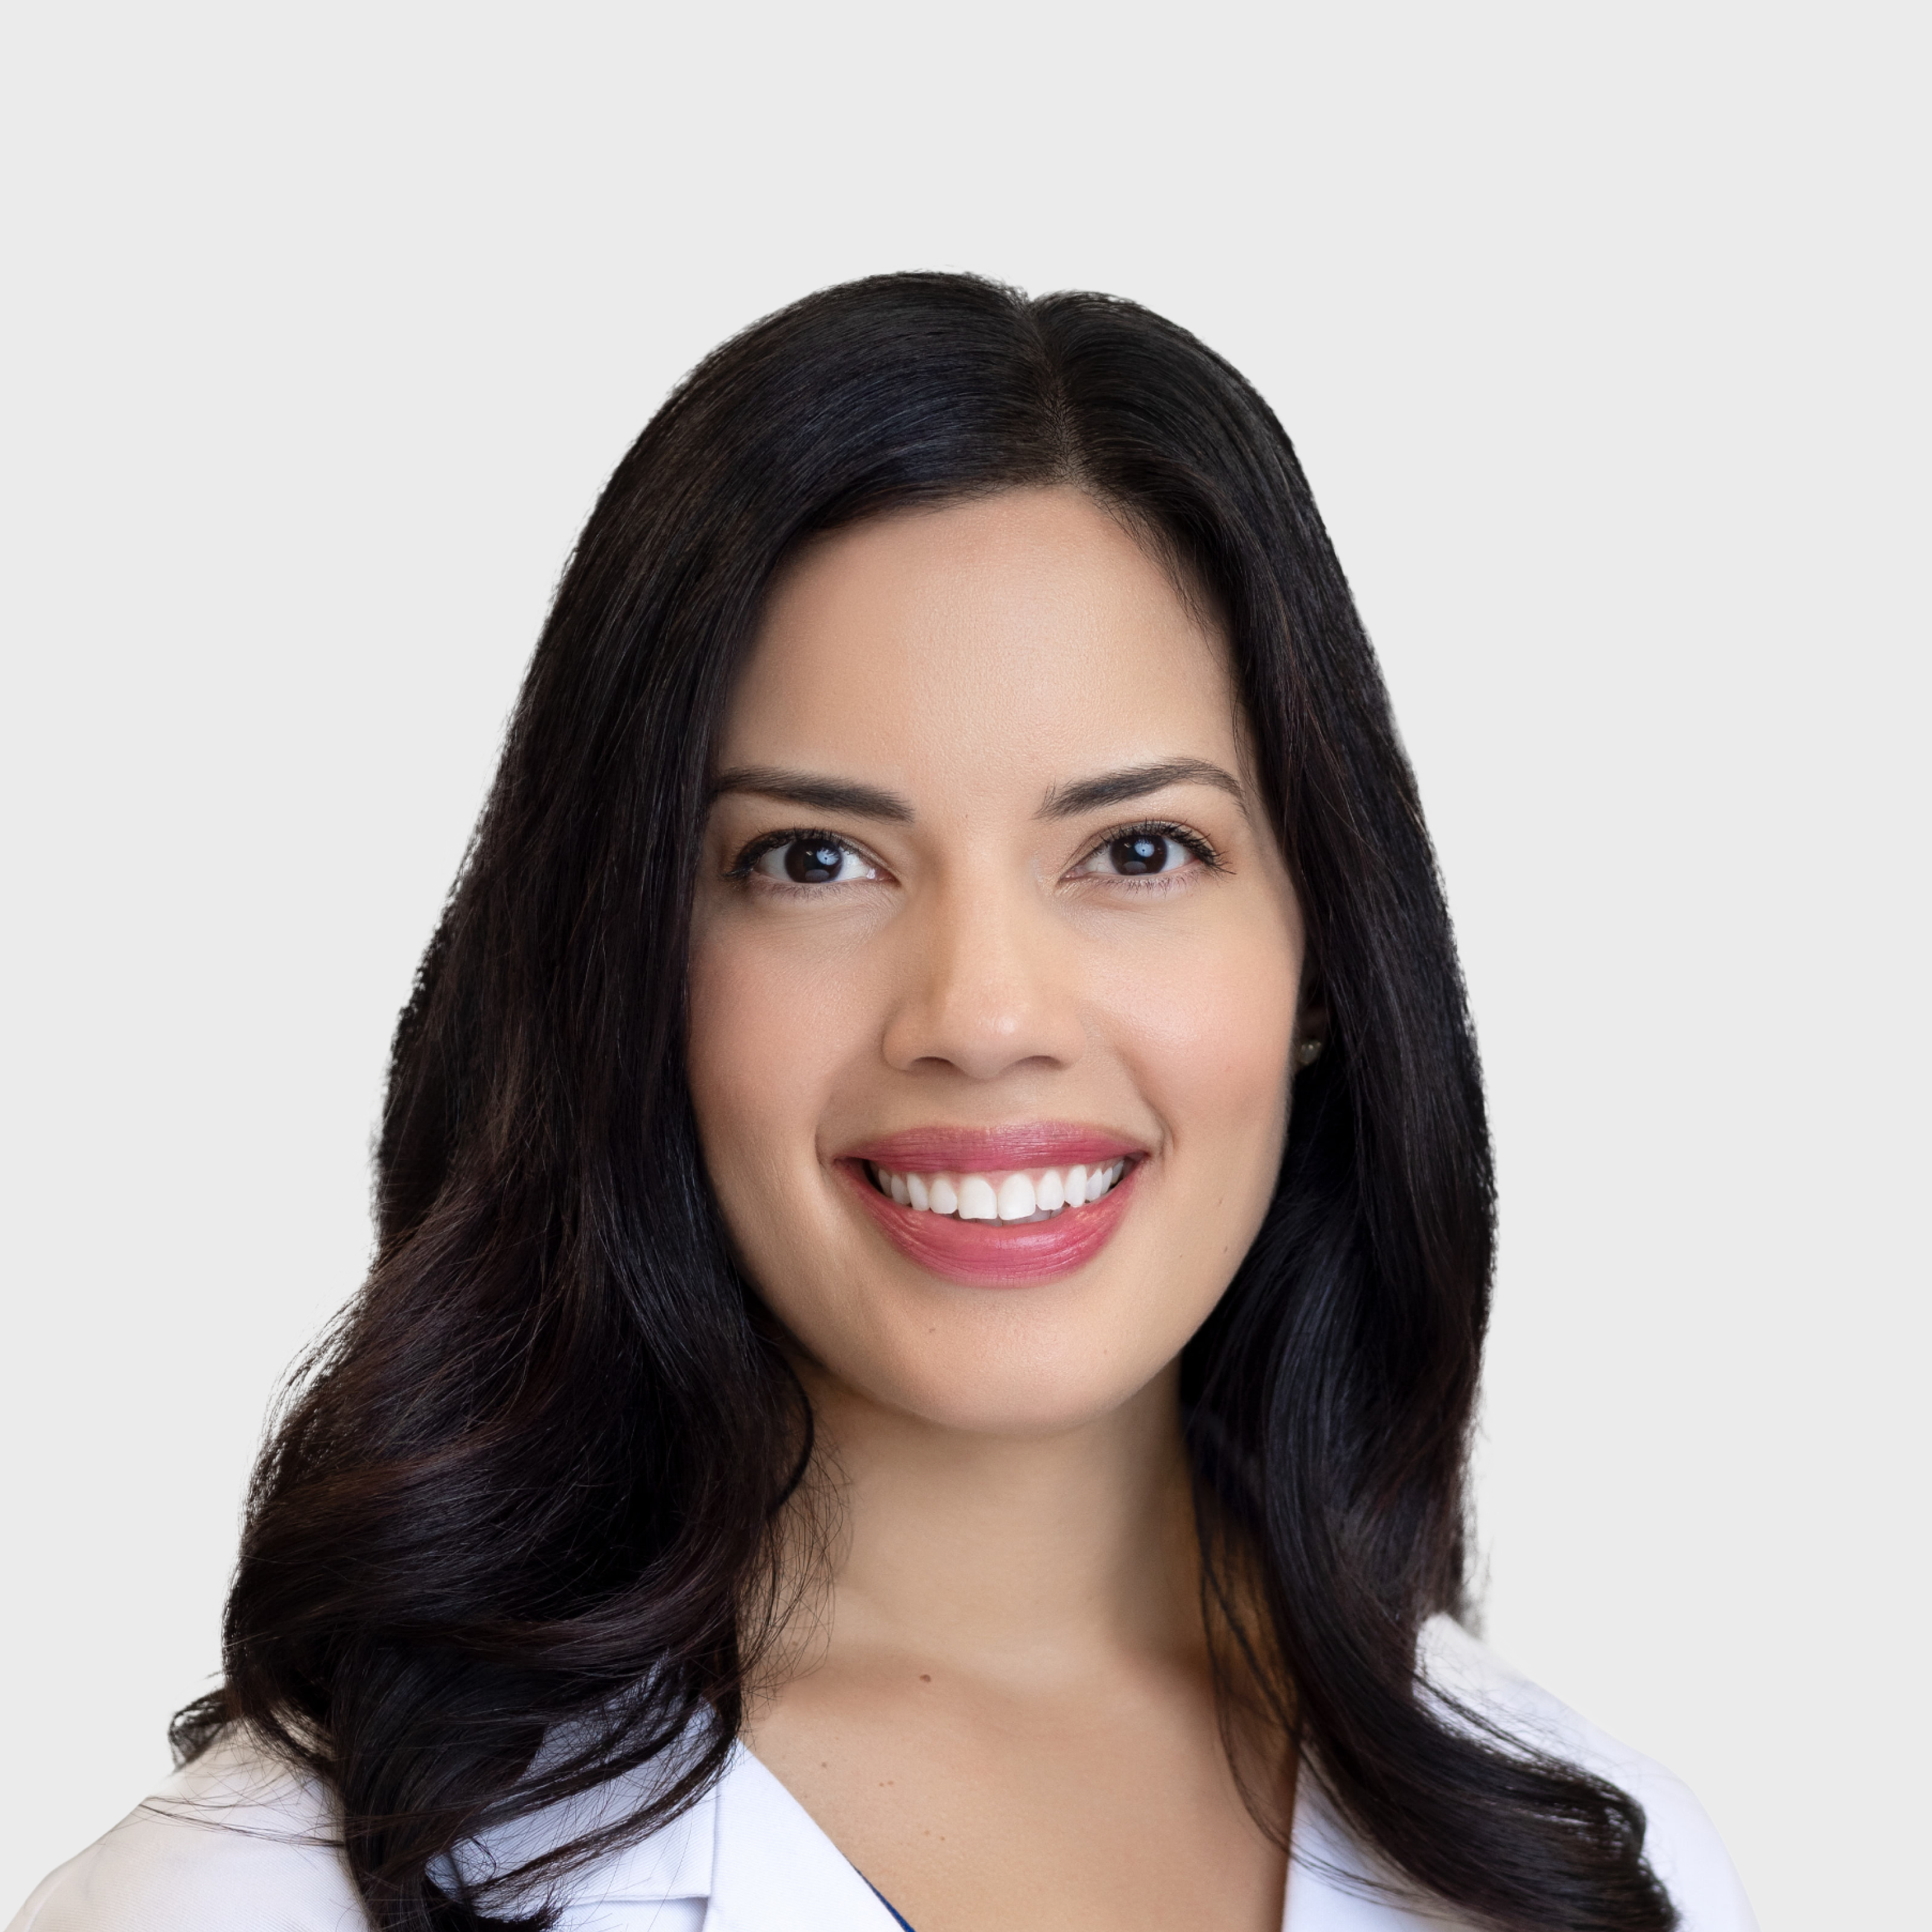 Physician Spotlight on Dr. Eliana Cardozo